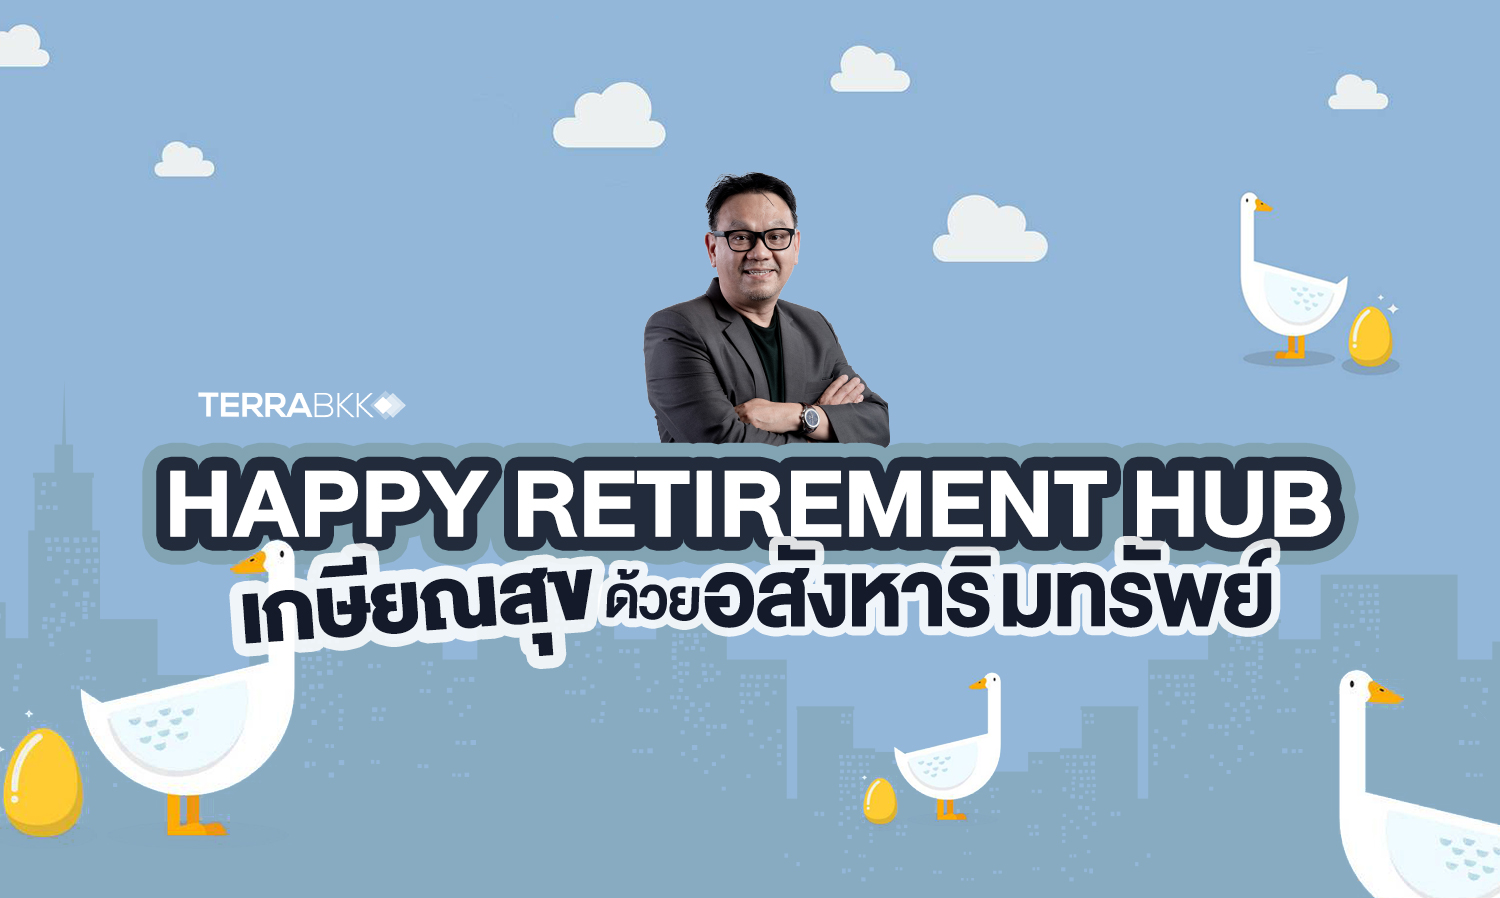 Happy Retirement Hub เกษียณสุขด้วยอสังหาริมทรัพย์